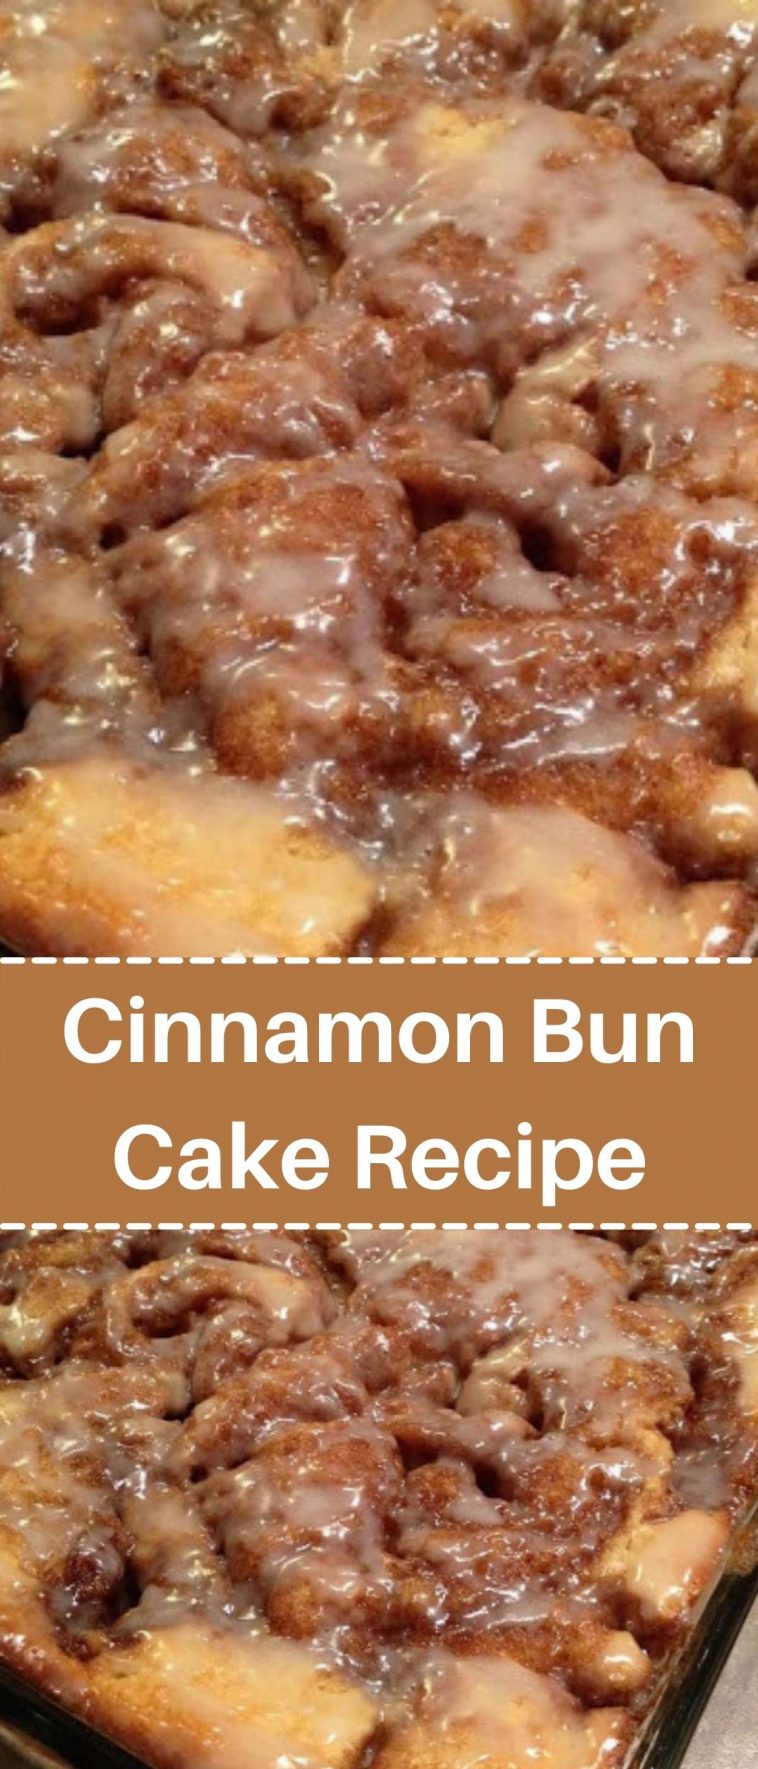 Cinnamon Bun Cake Recipe